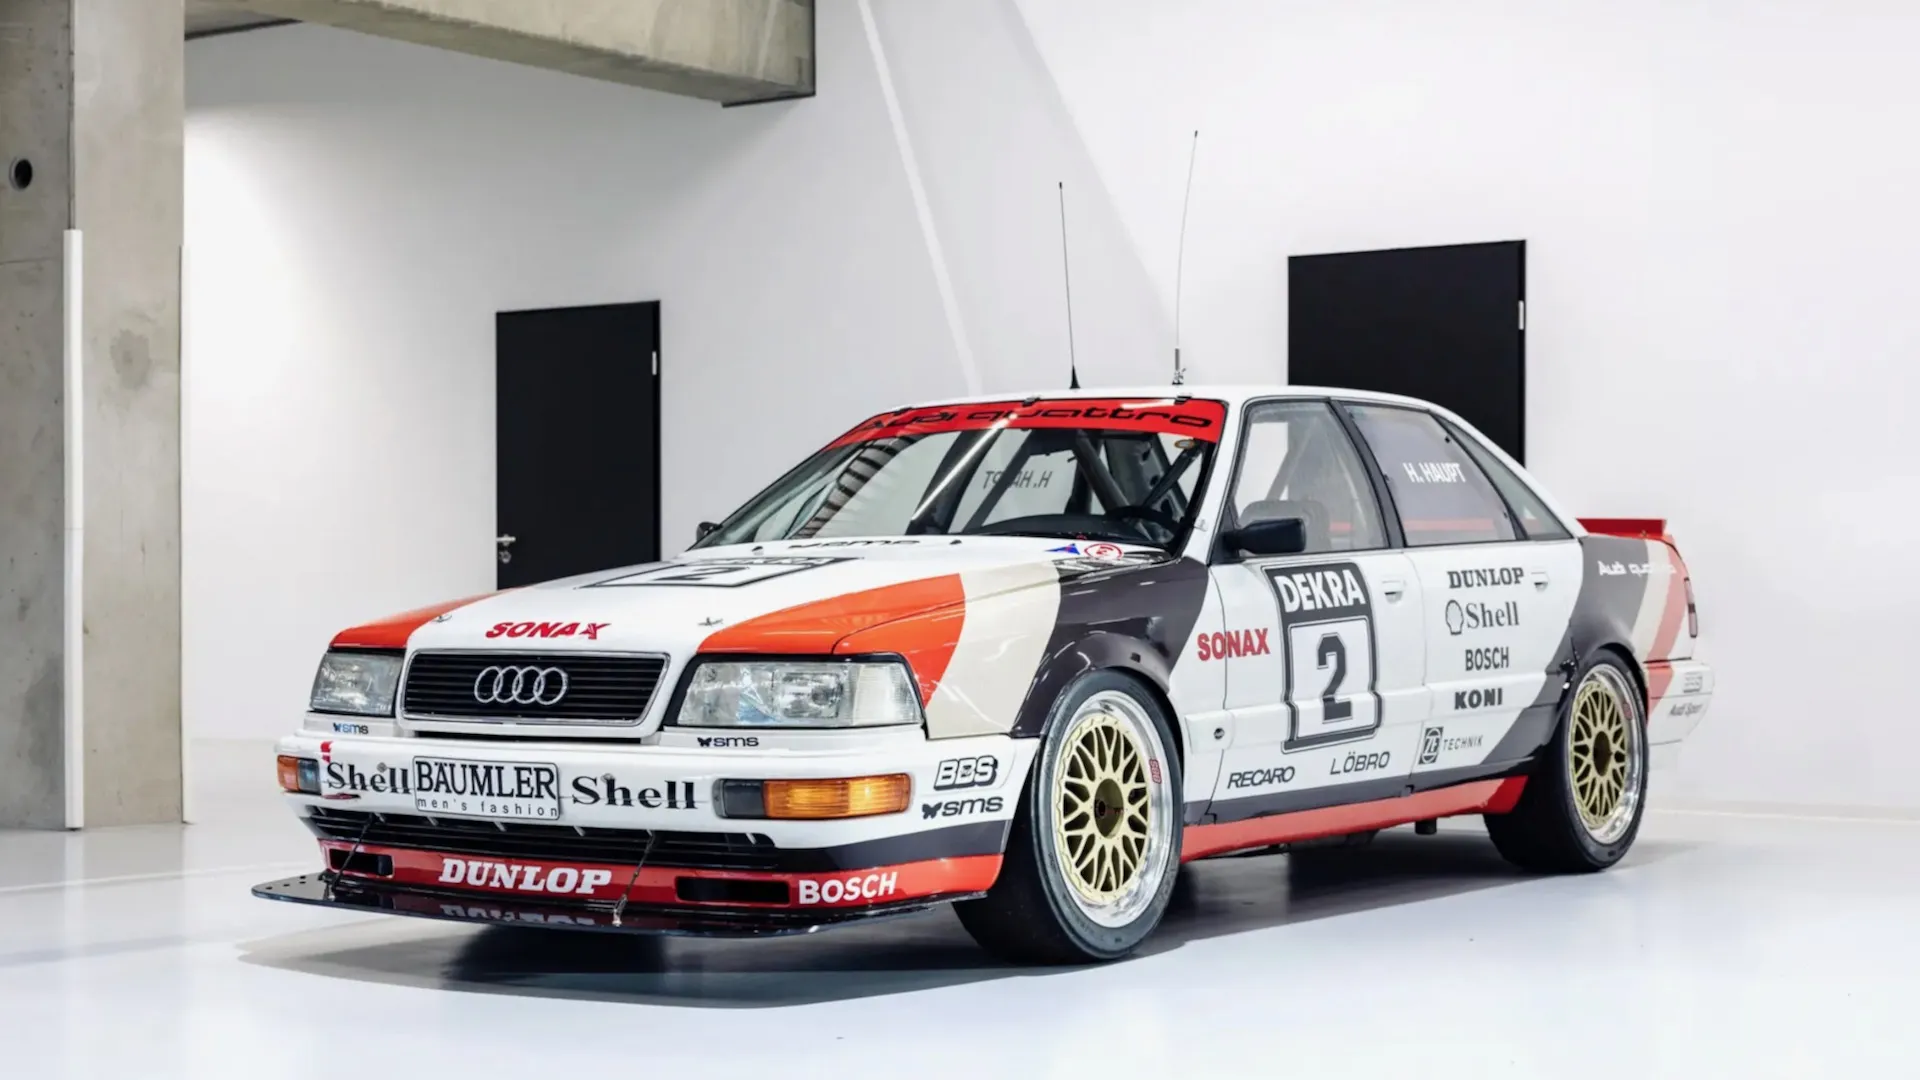 1991 Audi V8 Quattro DTM racing car up for auction